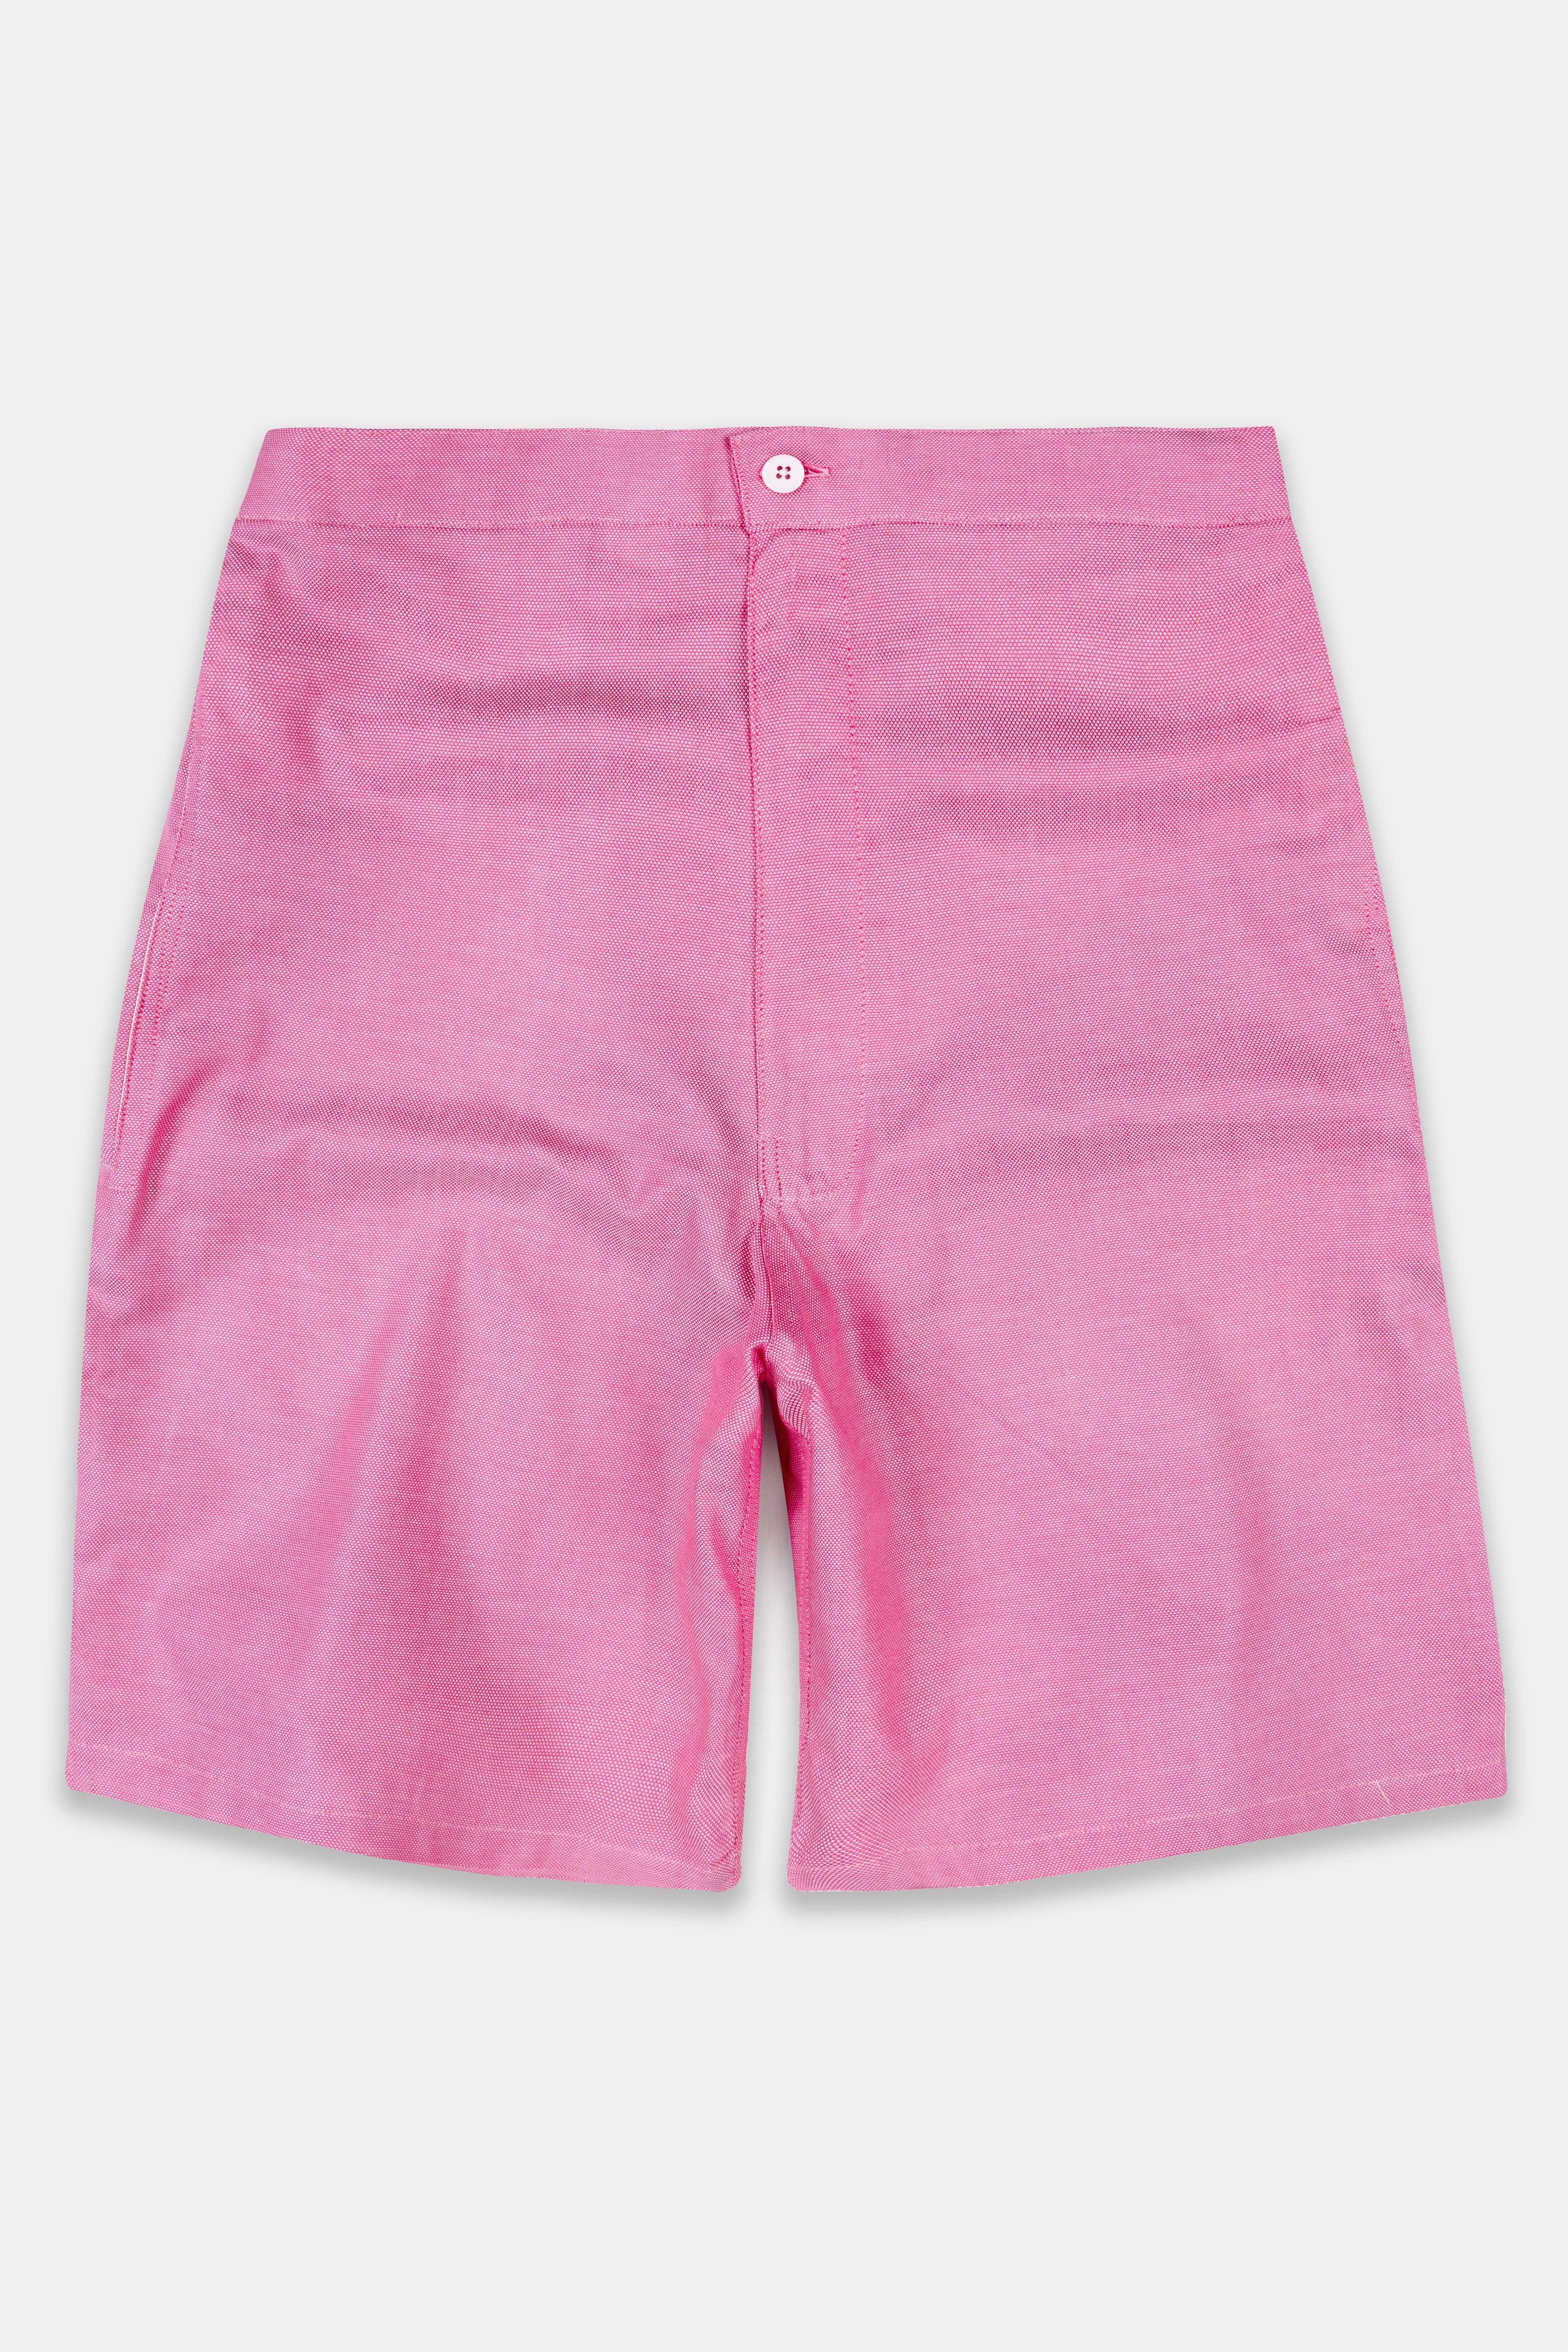 Thulian Pink Dobby Textured Giza Cotton Shorts SR378-28, SR378-30, SR378-32, SR378-34, SR378-36, SR378-38, SR378-40, SR378-42, SR378-44